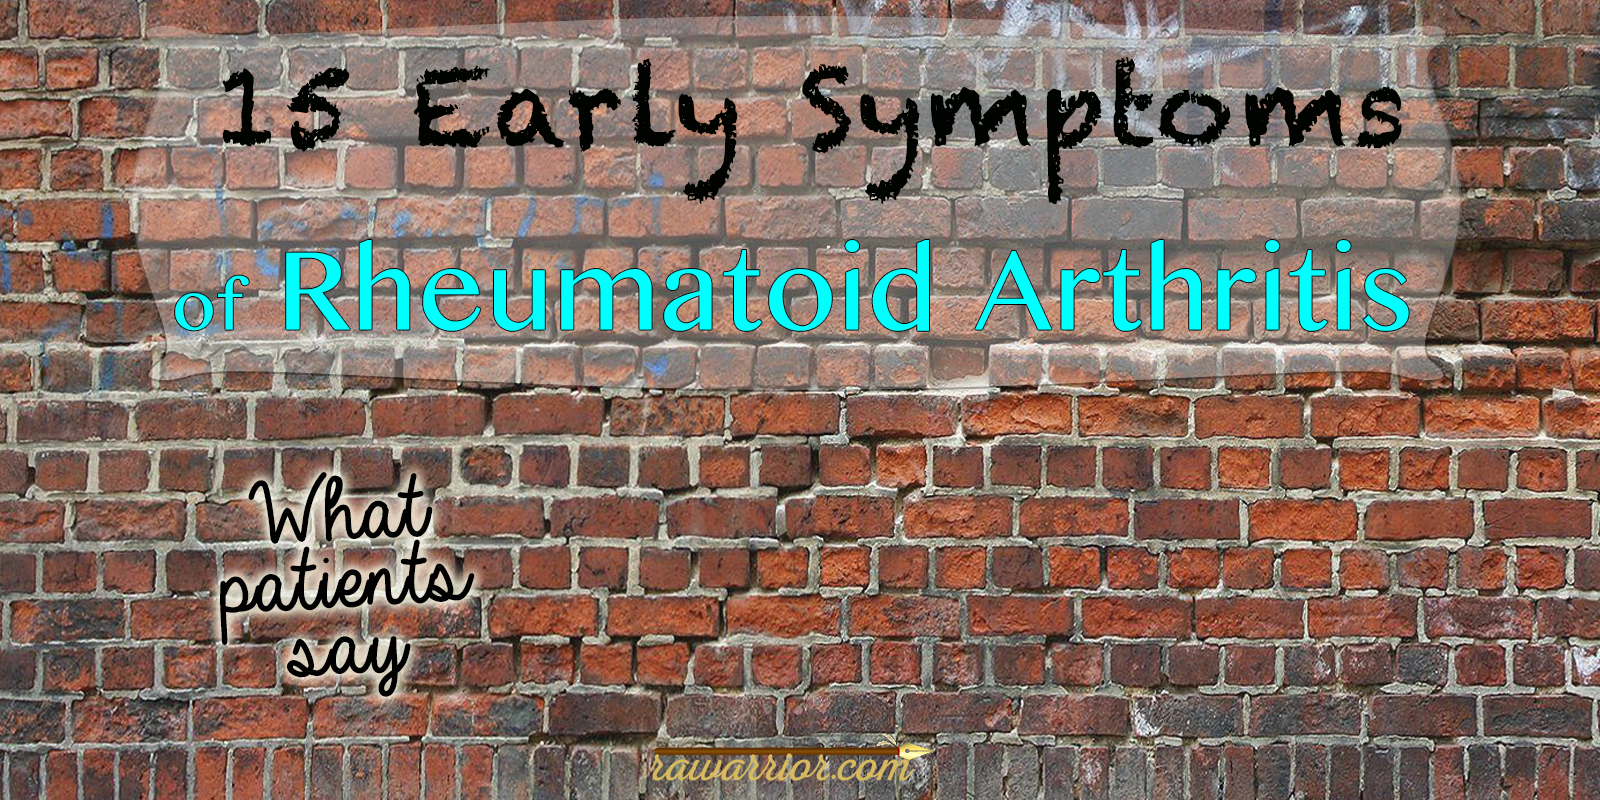 15 Early Symptoms of Rheumatoid Arthritis